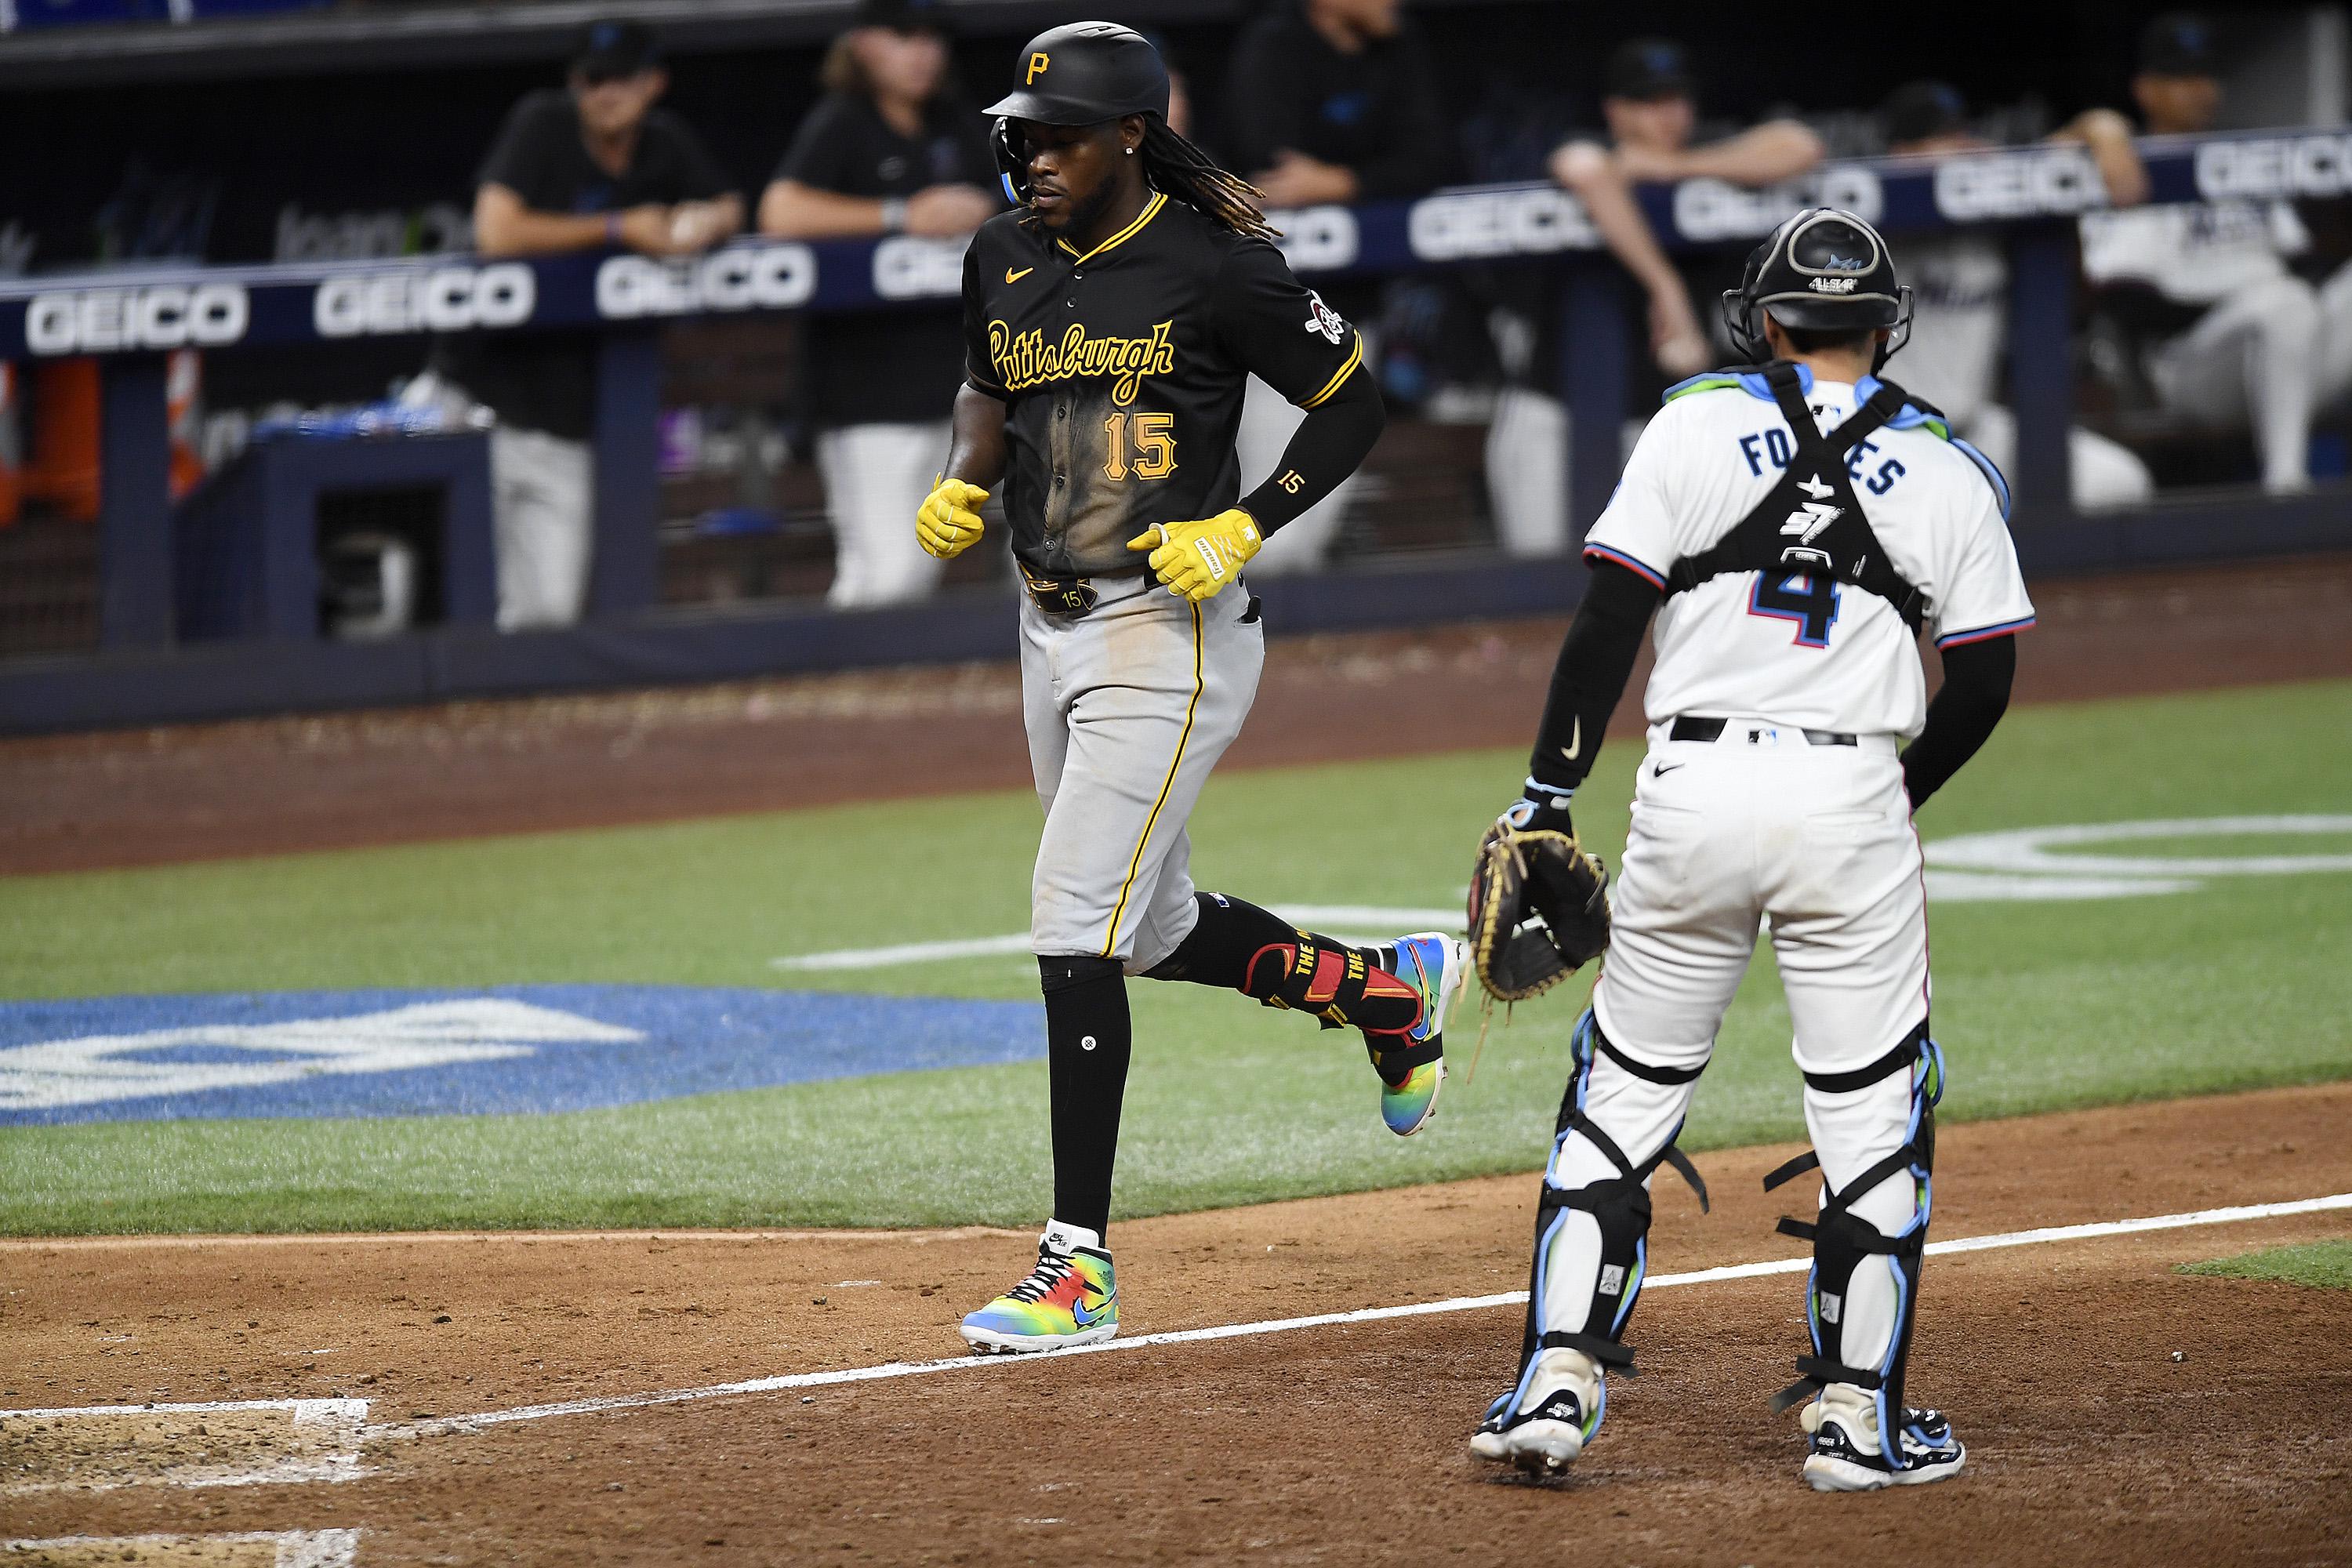 Pittsburgh Pirates shortstop Oneil Cruz runs across home plate